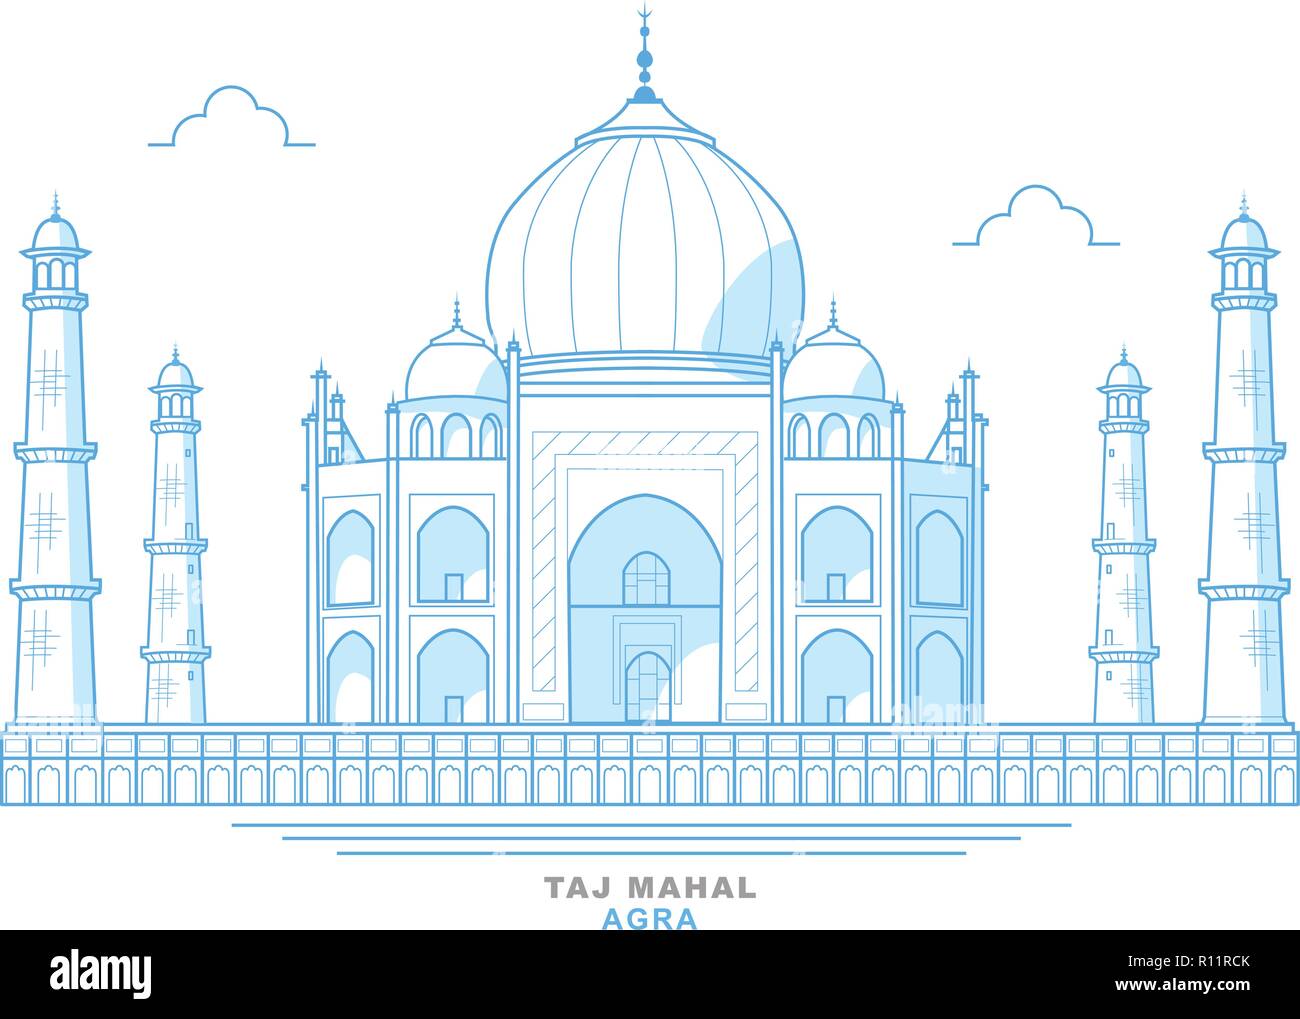 Taj Mahal Drawing High Resolution Stock Photography And Images Alamy